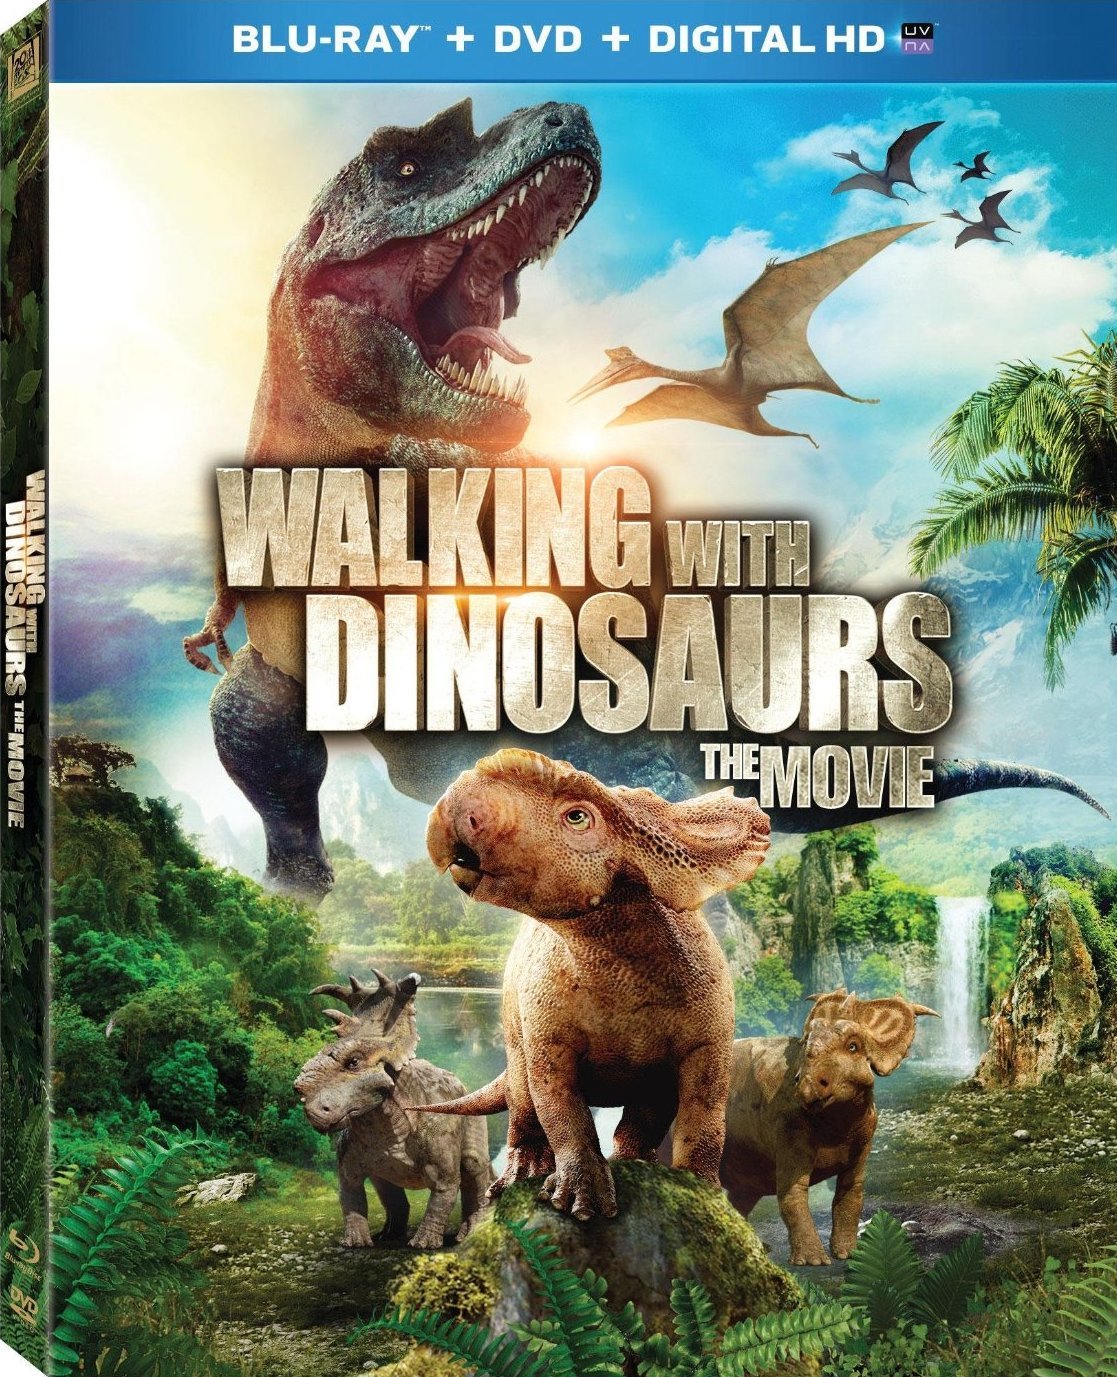 与恐龙同业3D Walking.With.Dinosaurs.2013.1080p.BluRay.DTS-HD.MA.5.1.x264-PublicHD 9.5-1.jpg